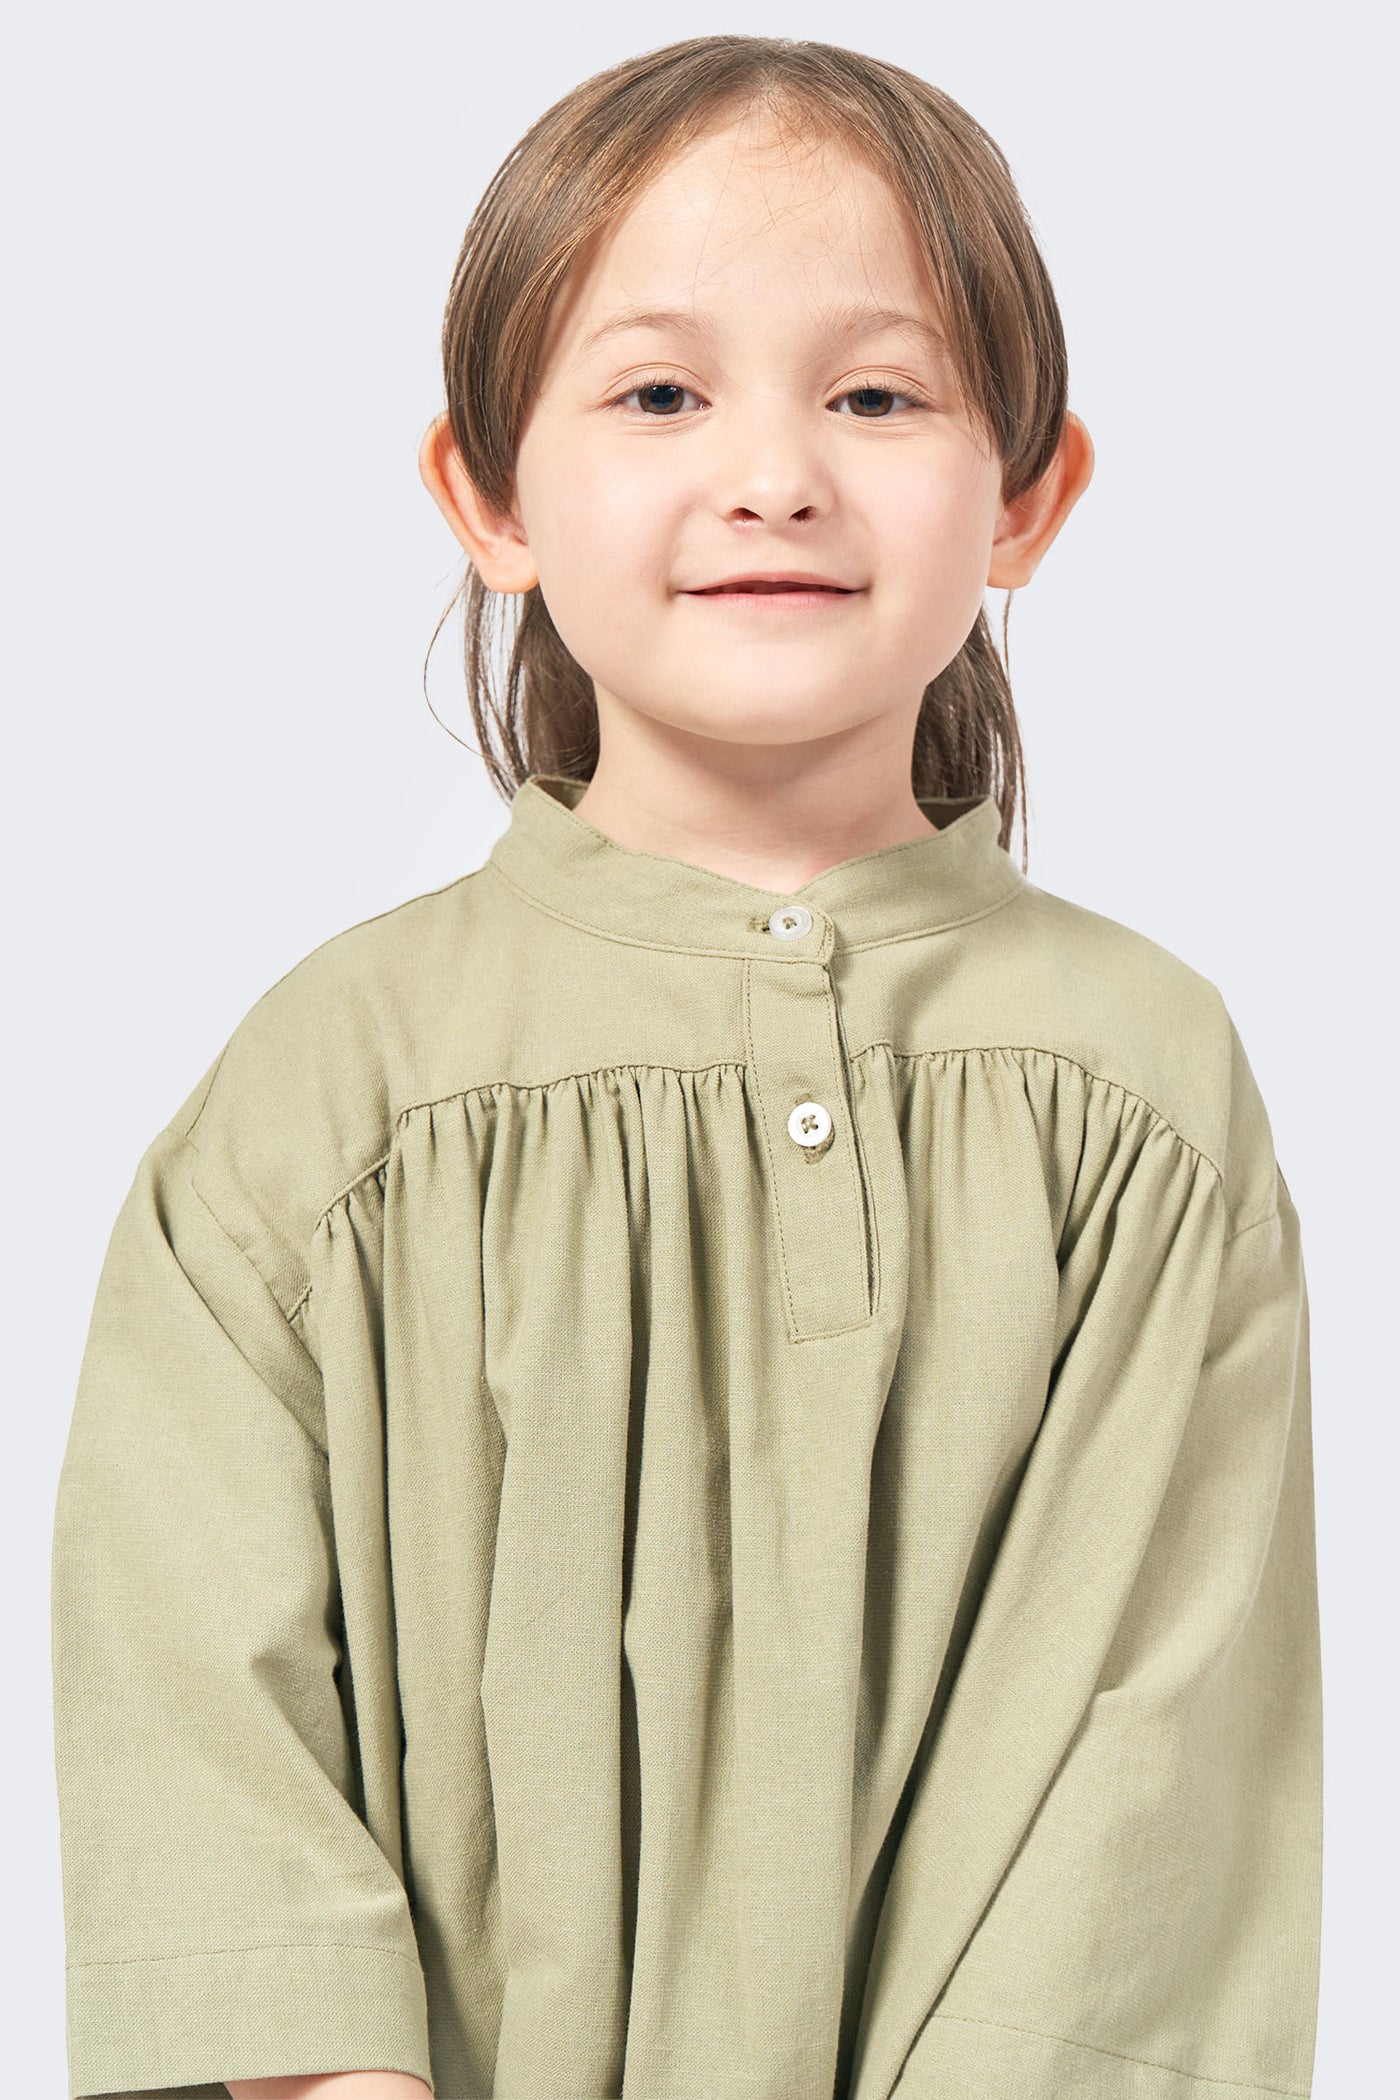 Kids' Quarter Sleeve Shirred Dress